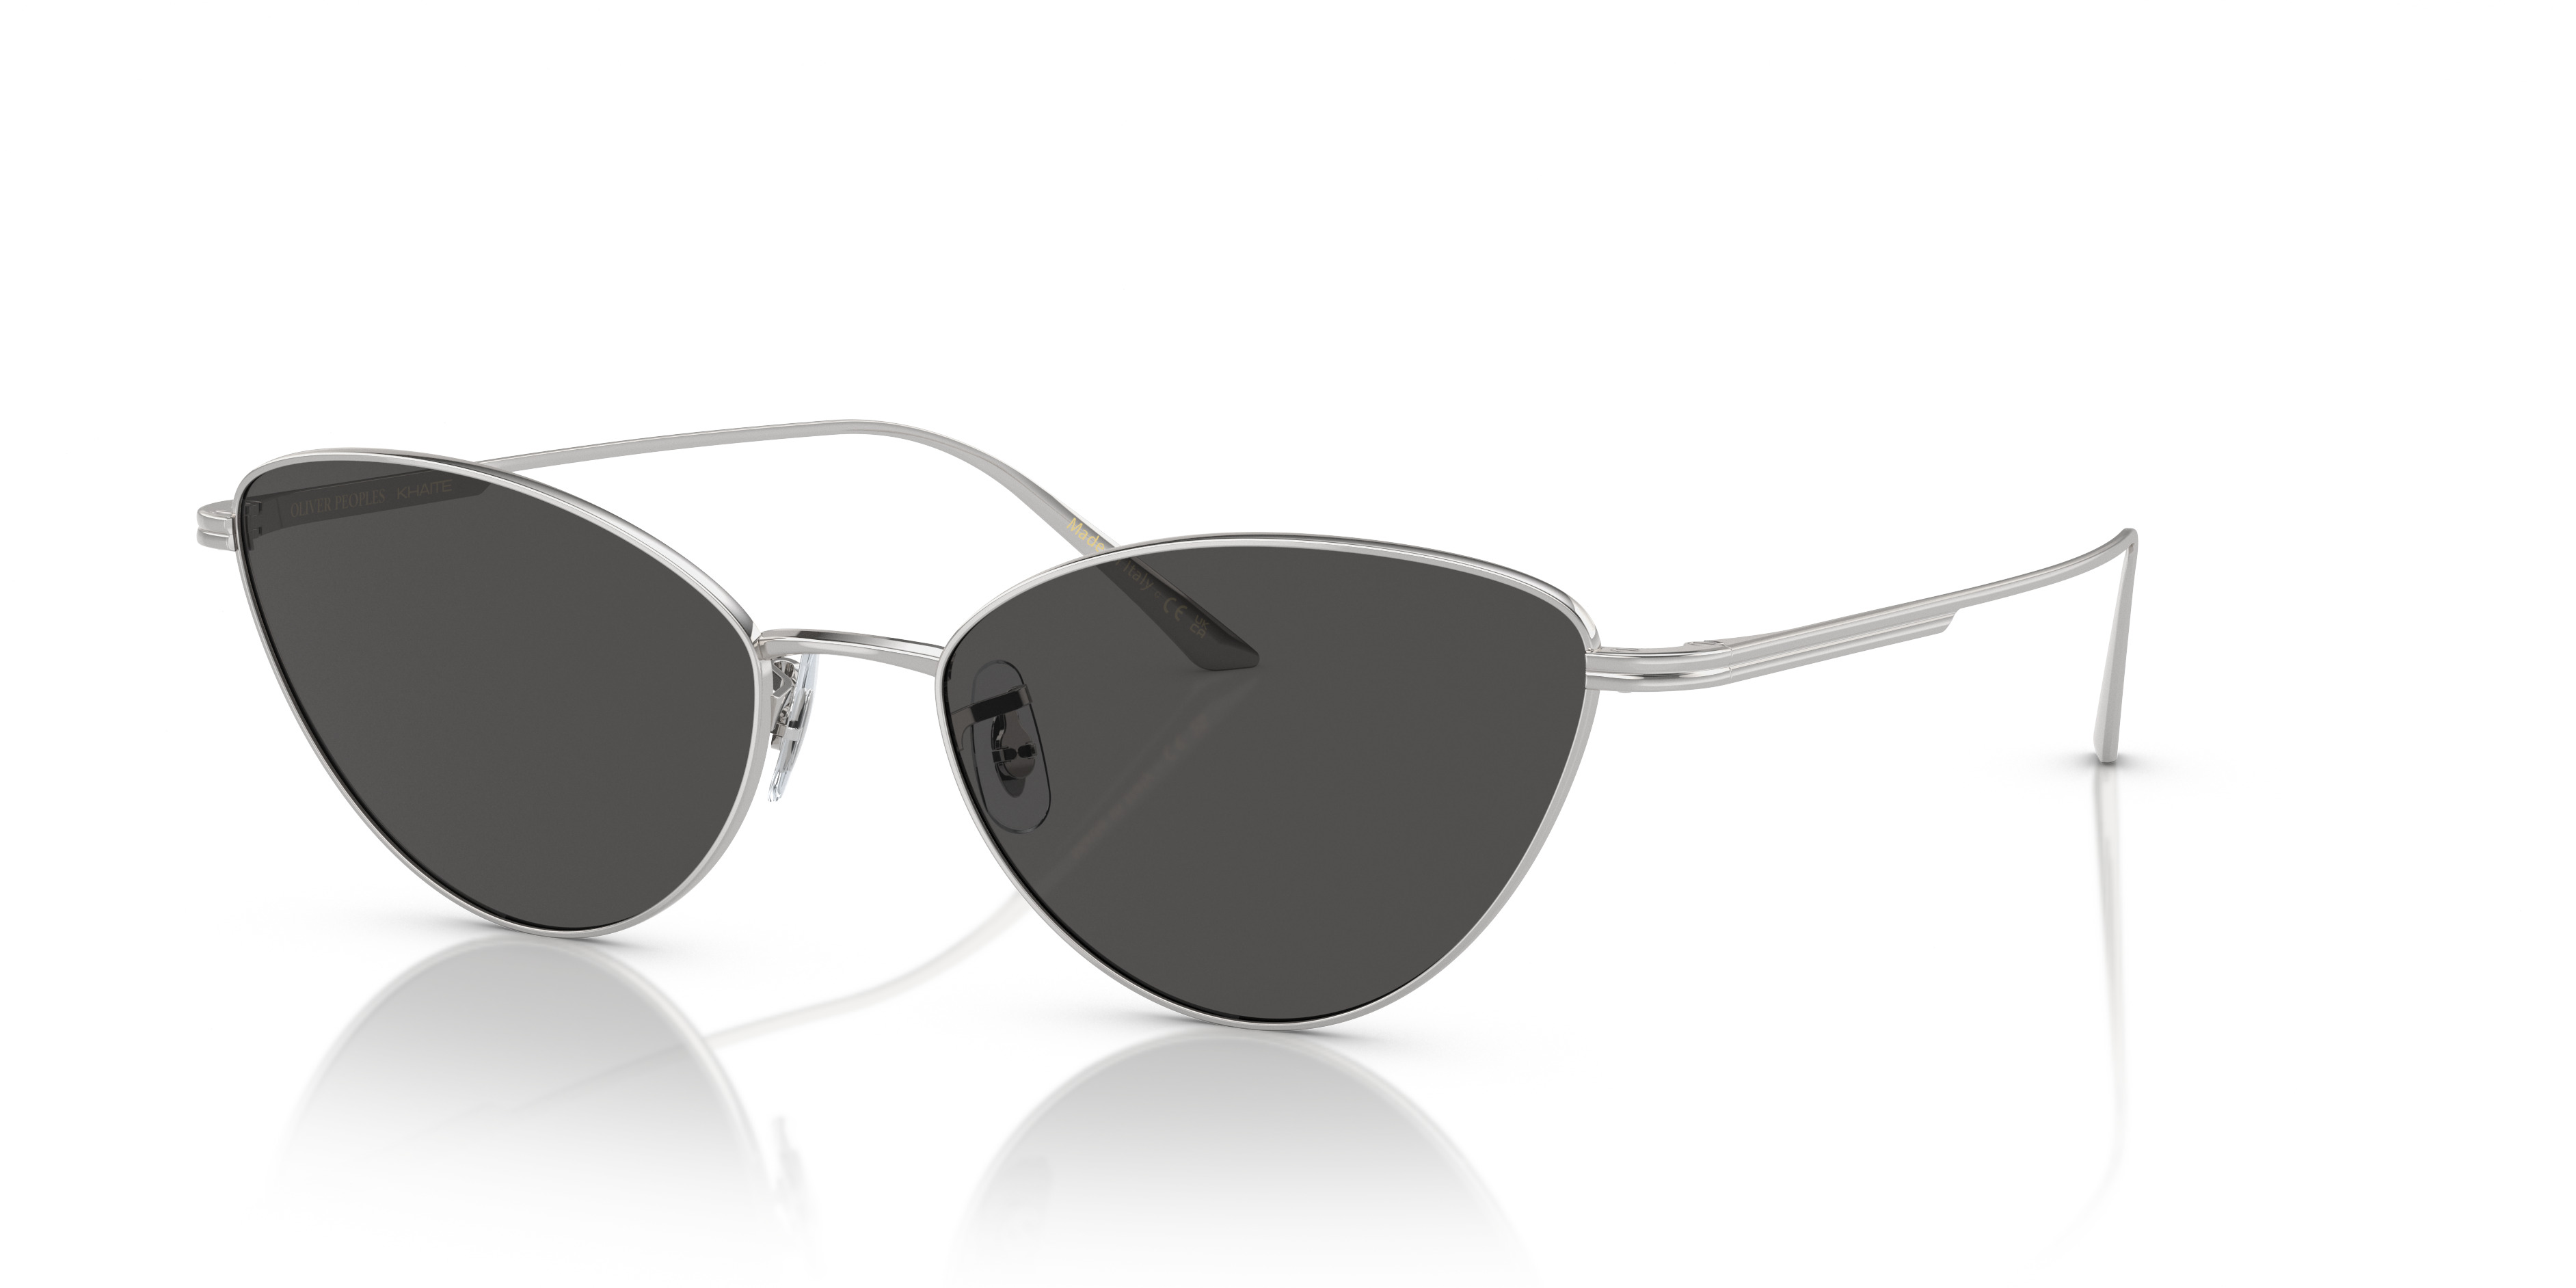 silver cat-eye sunglasses with black lenses